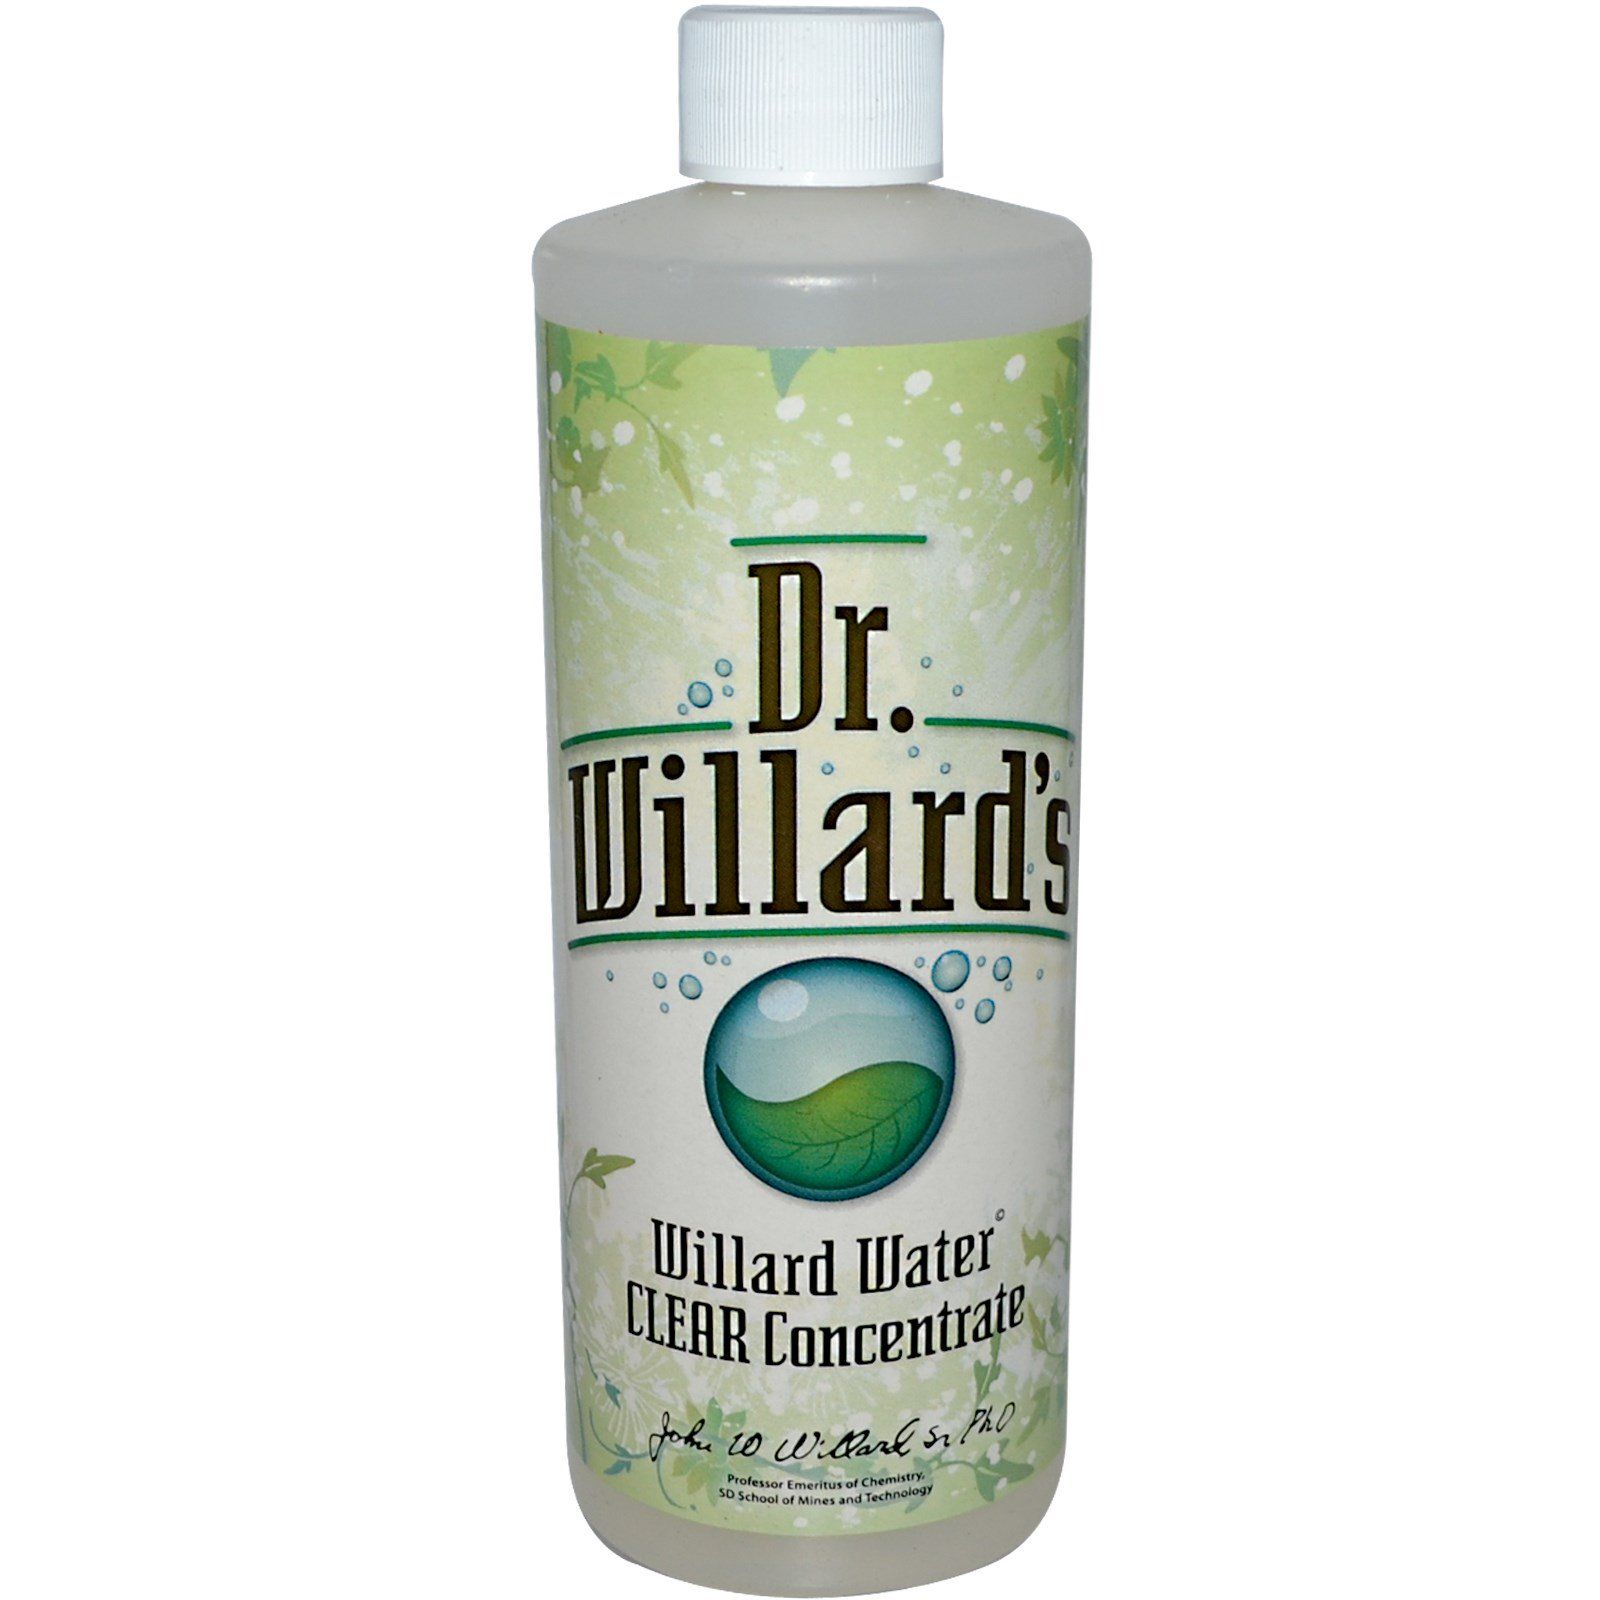 Willard Водный очищающий концентрат Уилларда 16 унций (0.473 л)